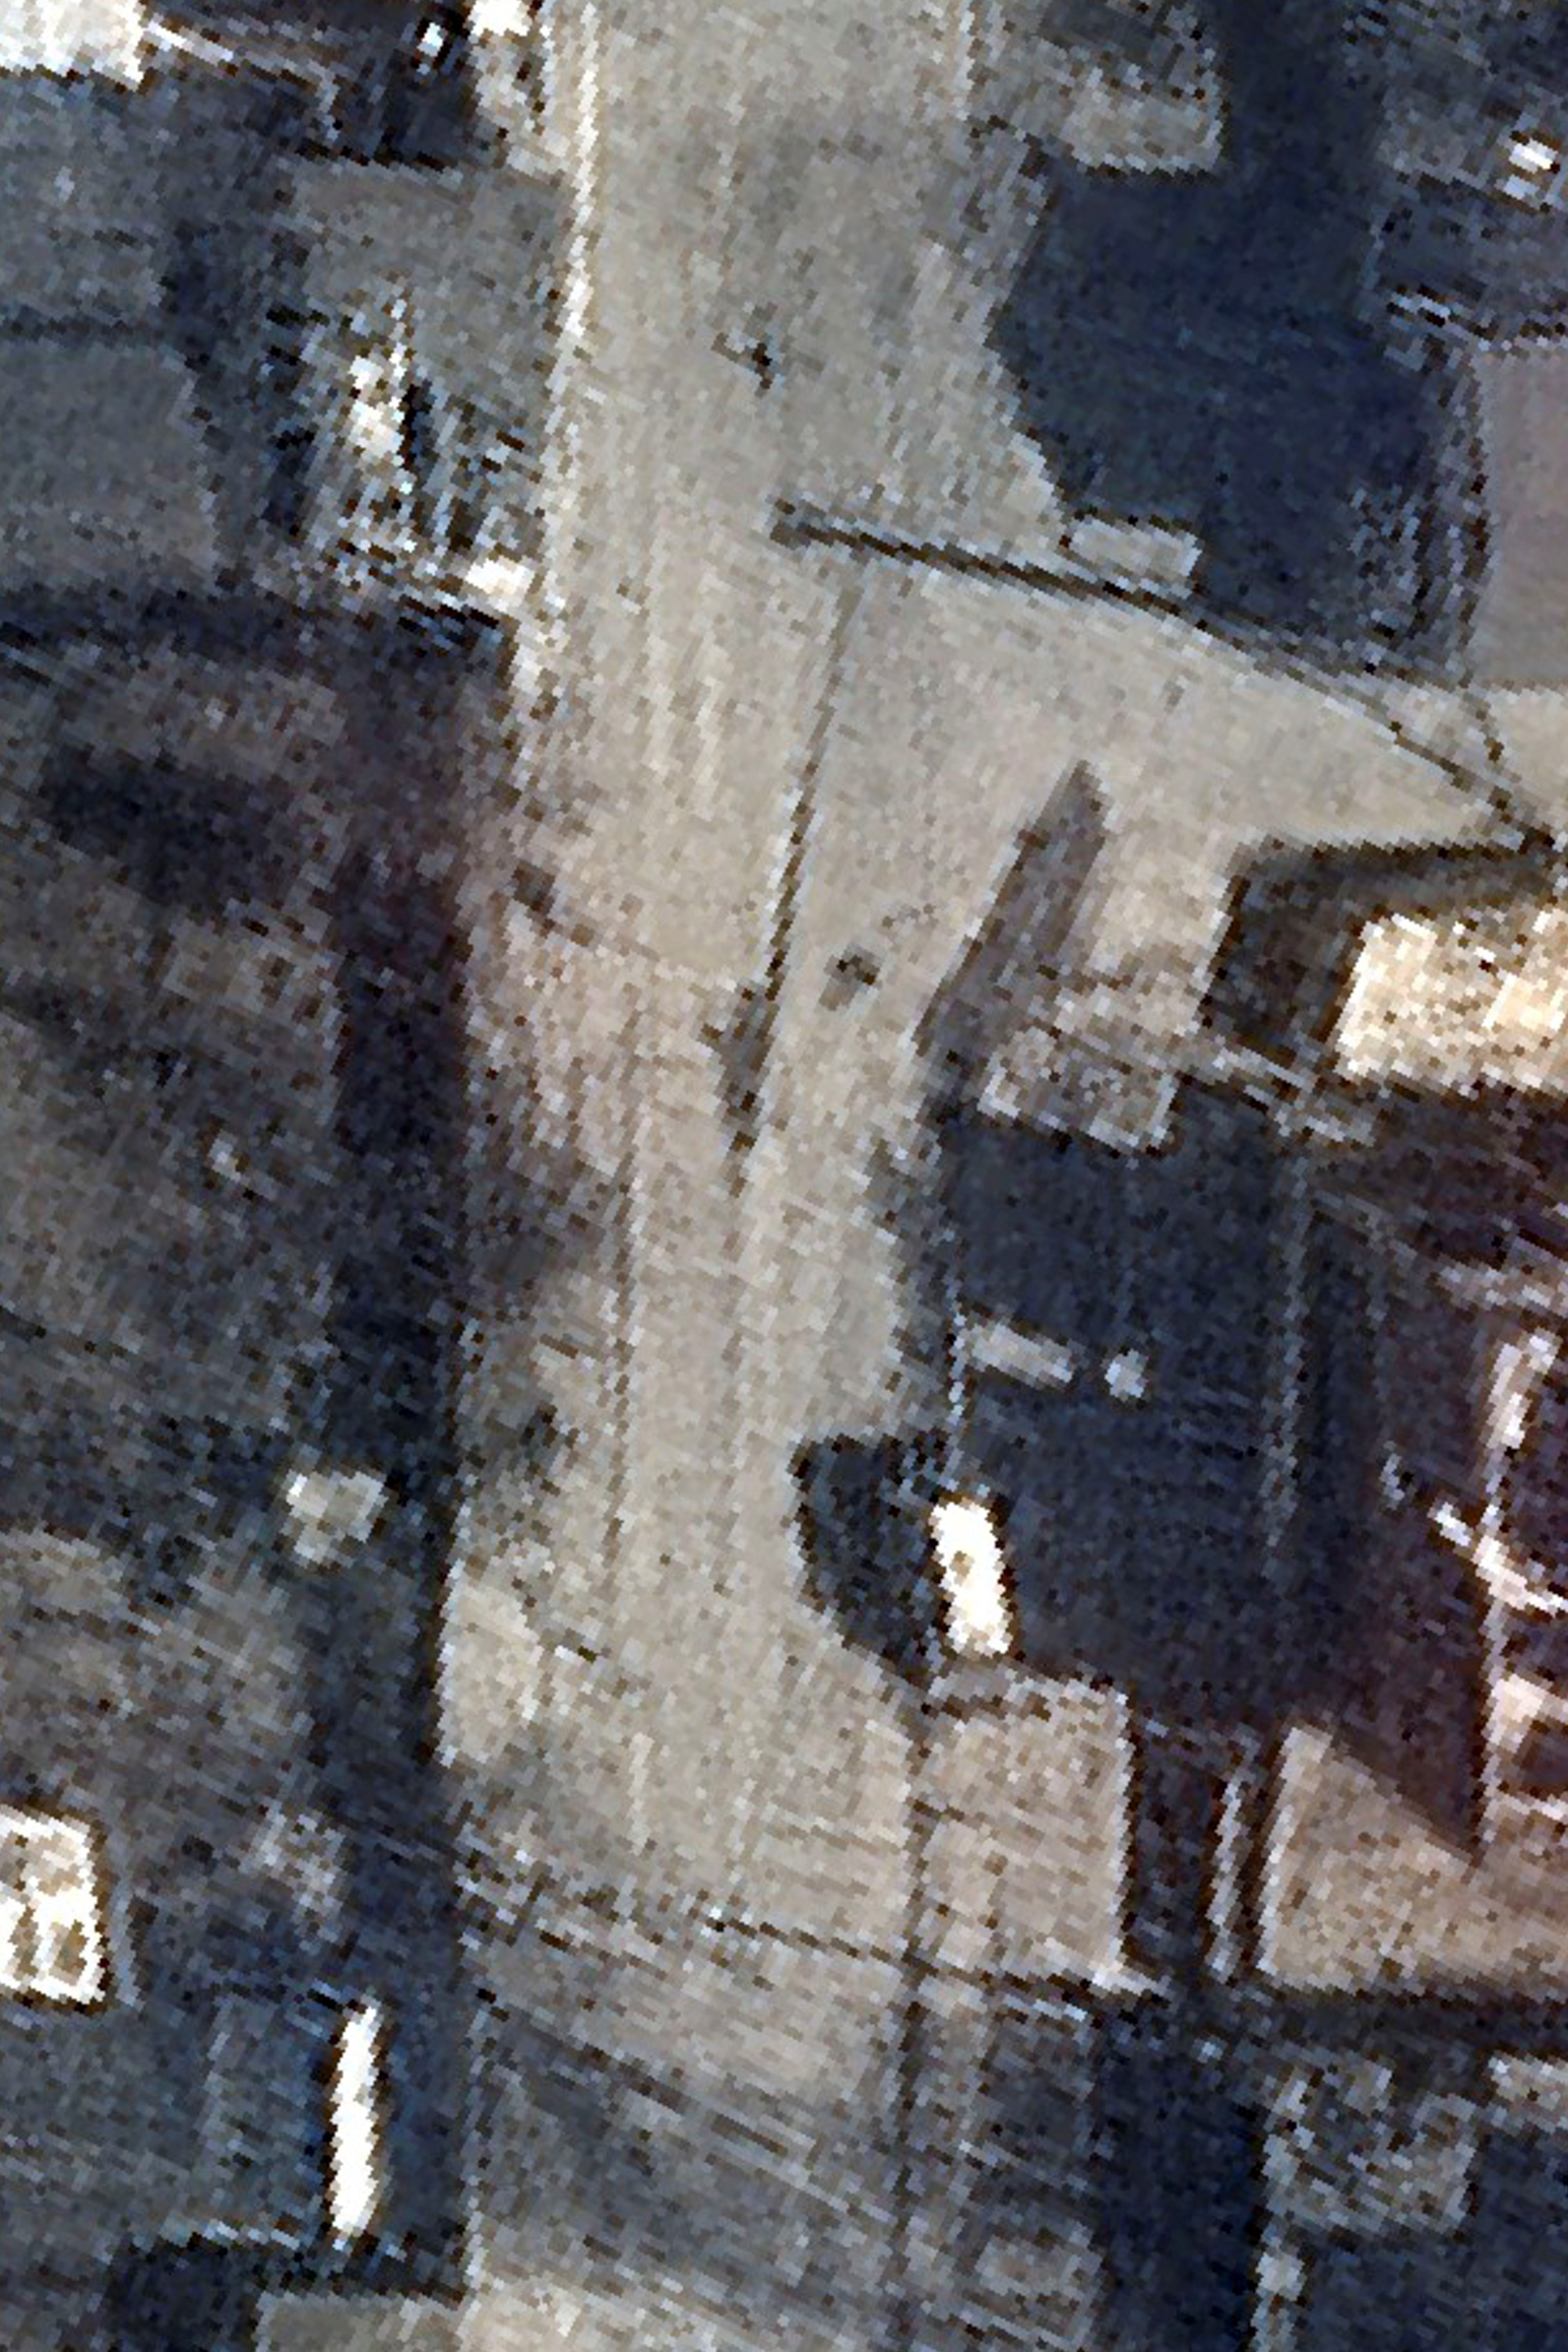 A satellite image shows dead bodies on Yablonska Street in Bucha